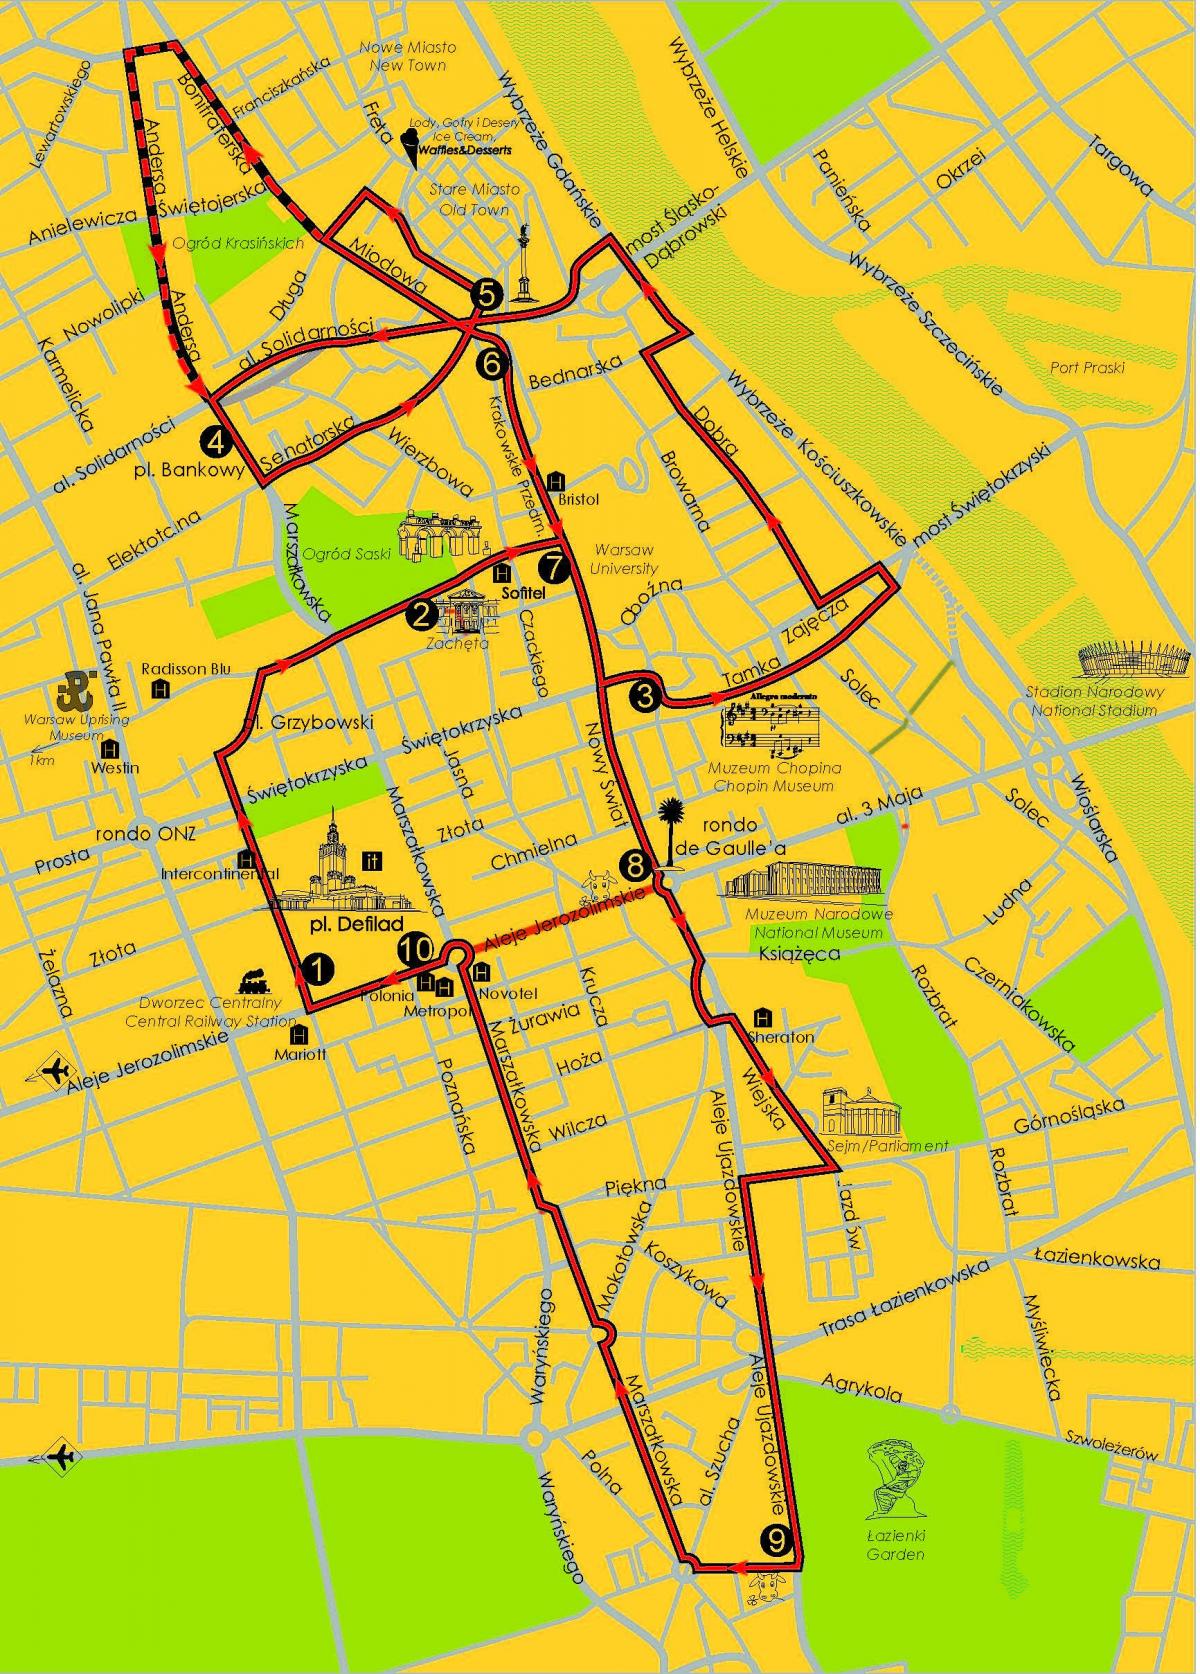 Map of Warsaw hop on hop off bus 